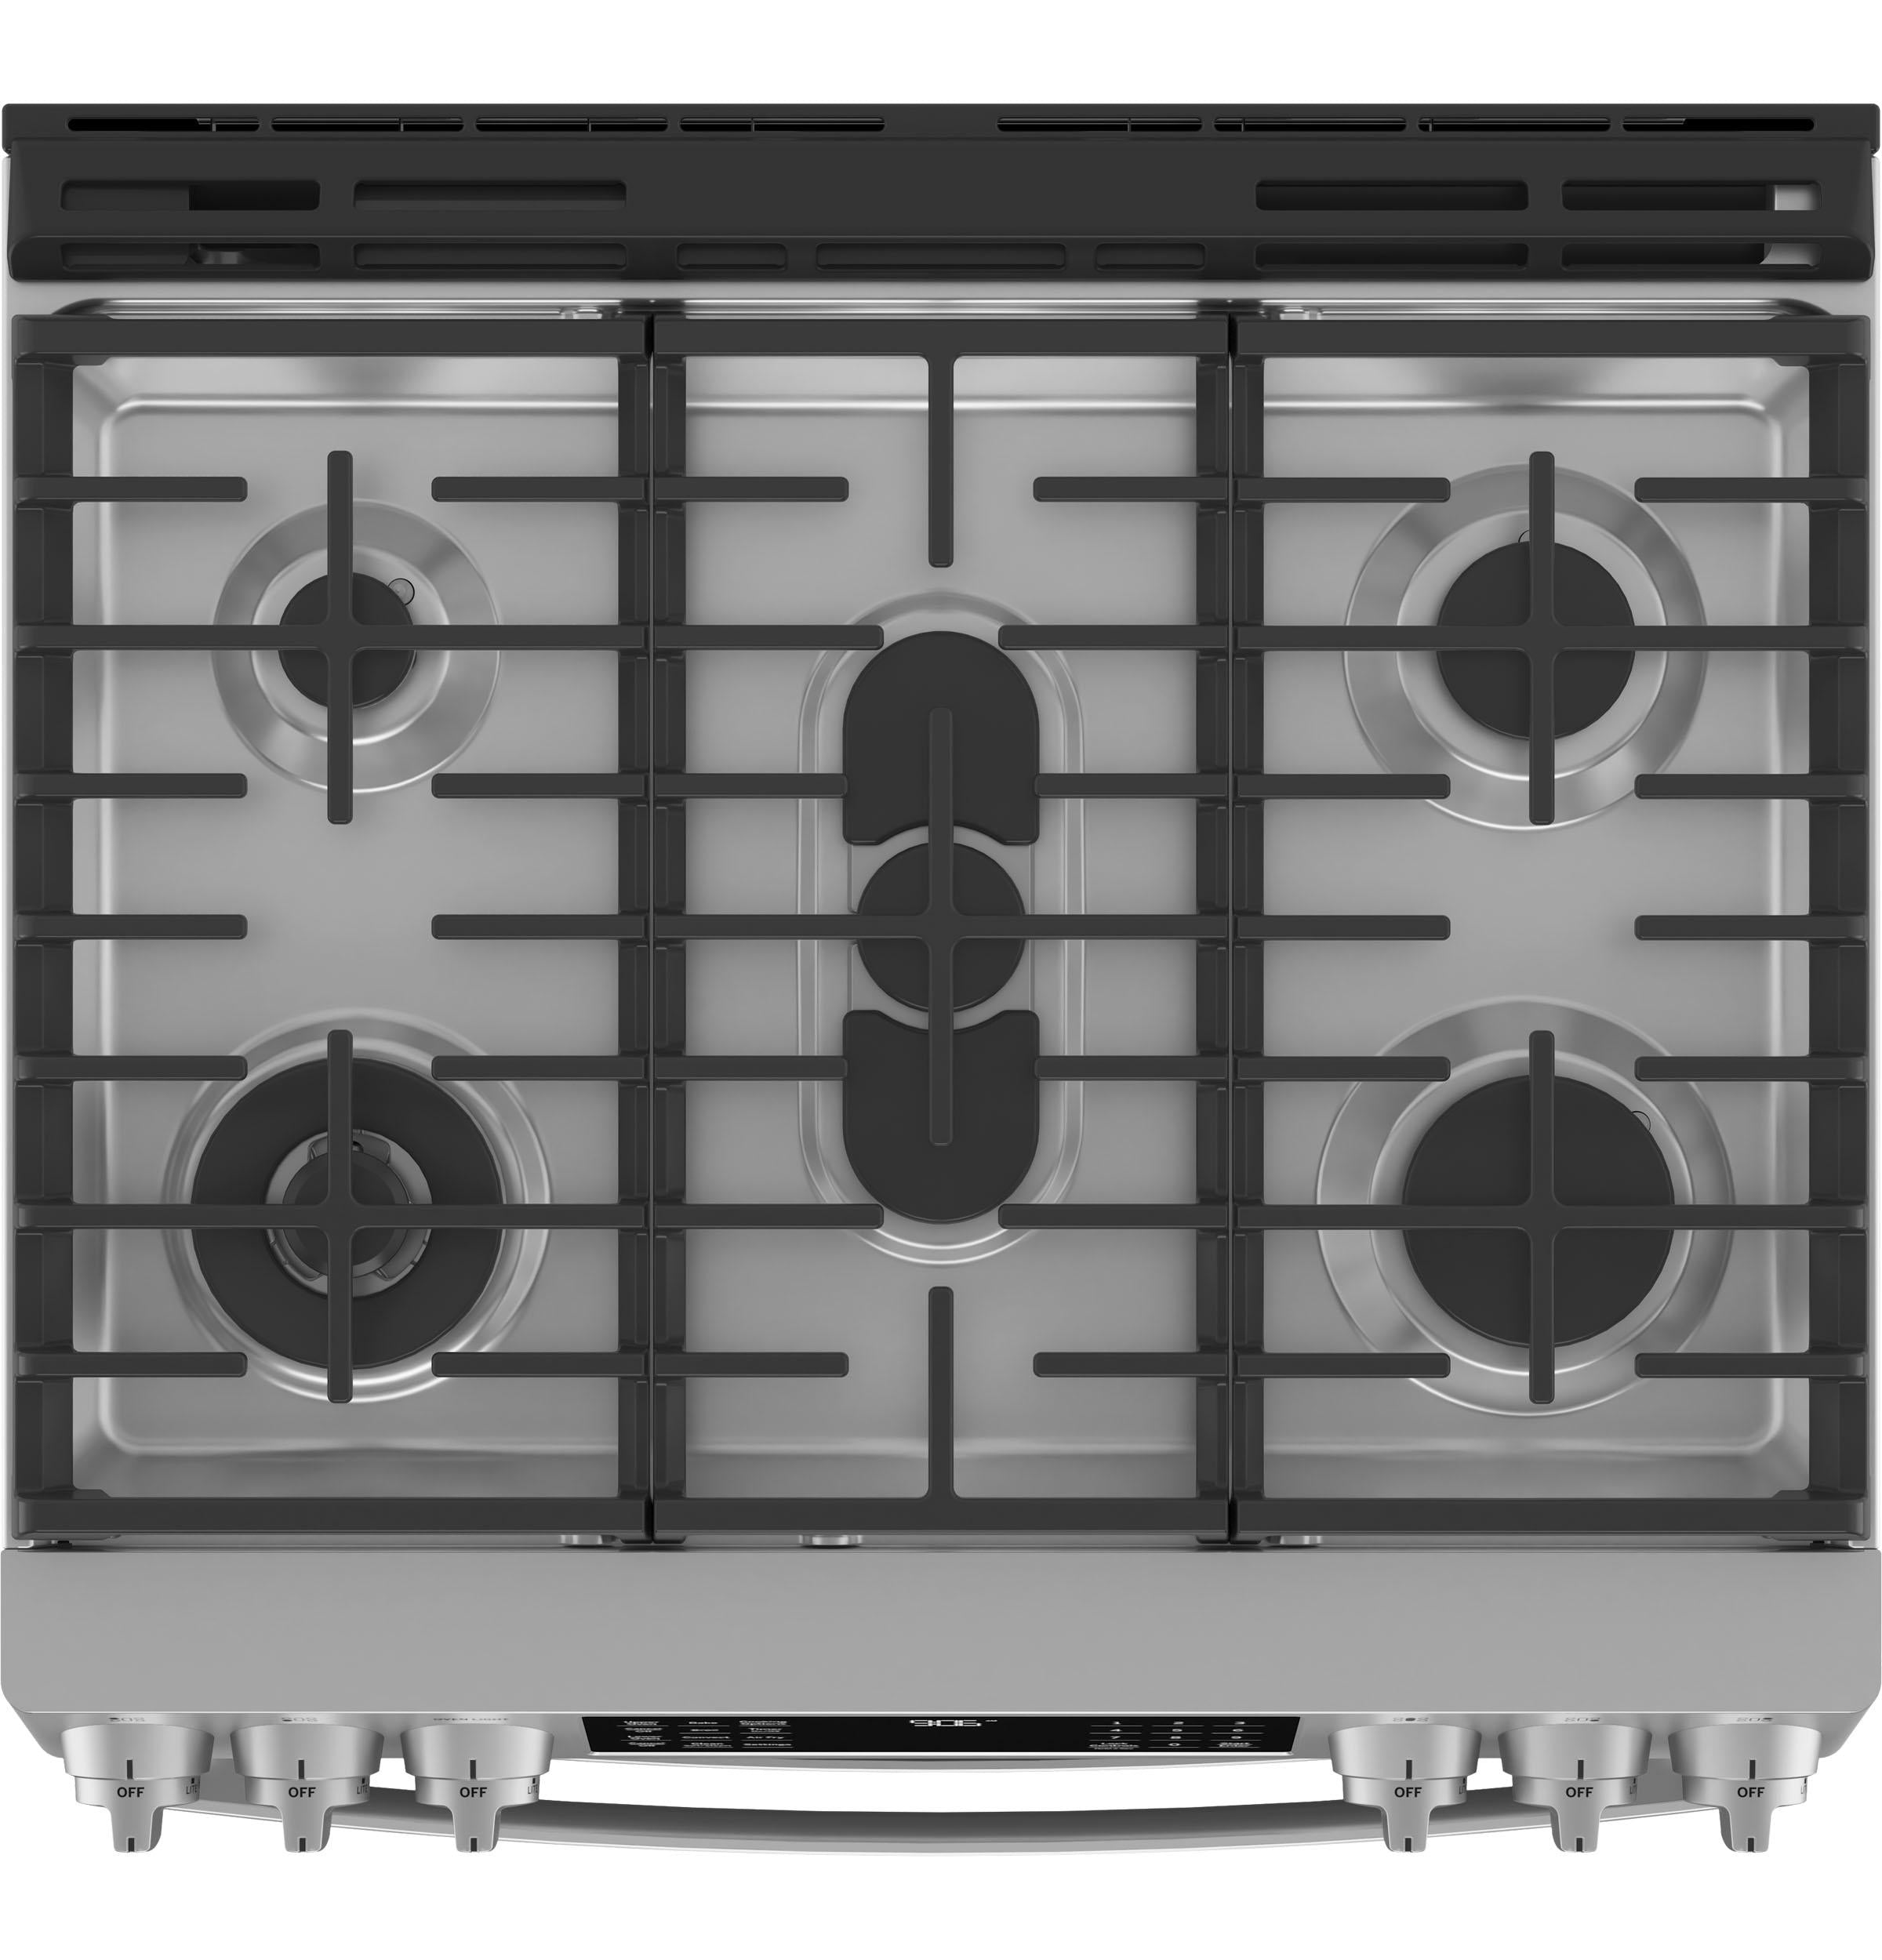 GE Profile™ 30" Smart Slide-In Front-Control Gas Double Oven Convection Fingerprint Resistant Range